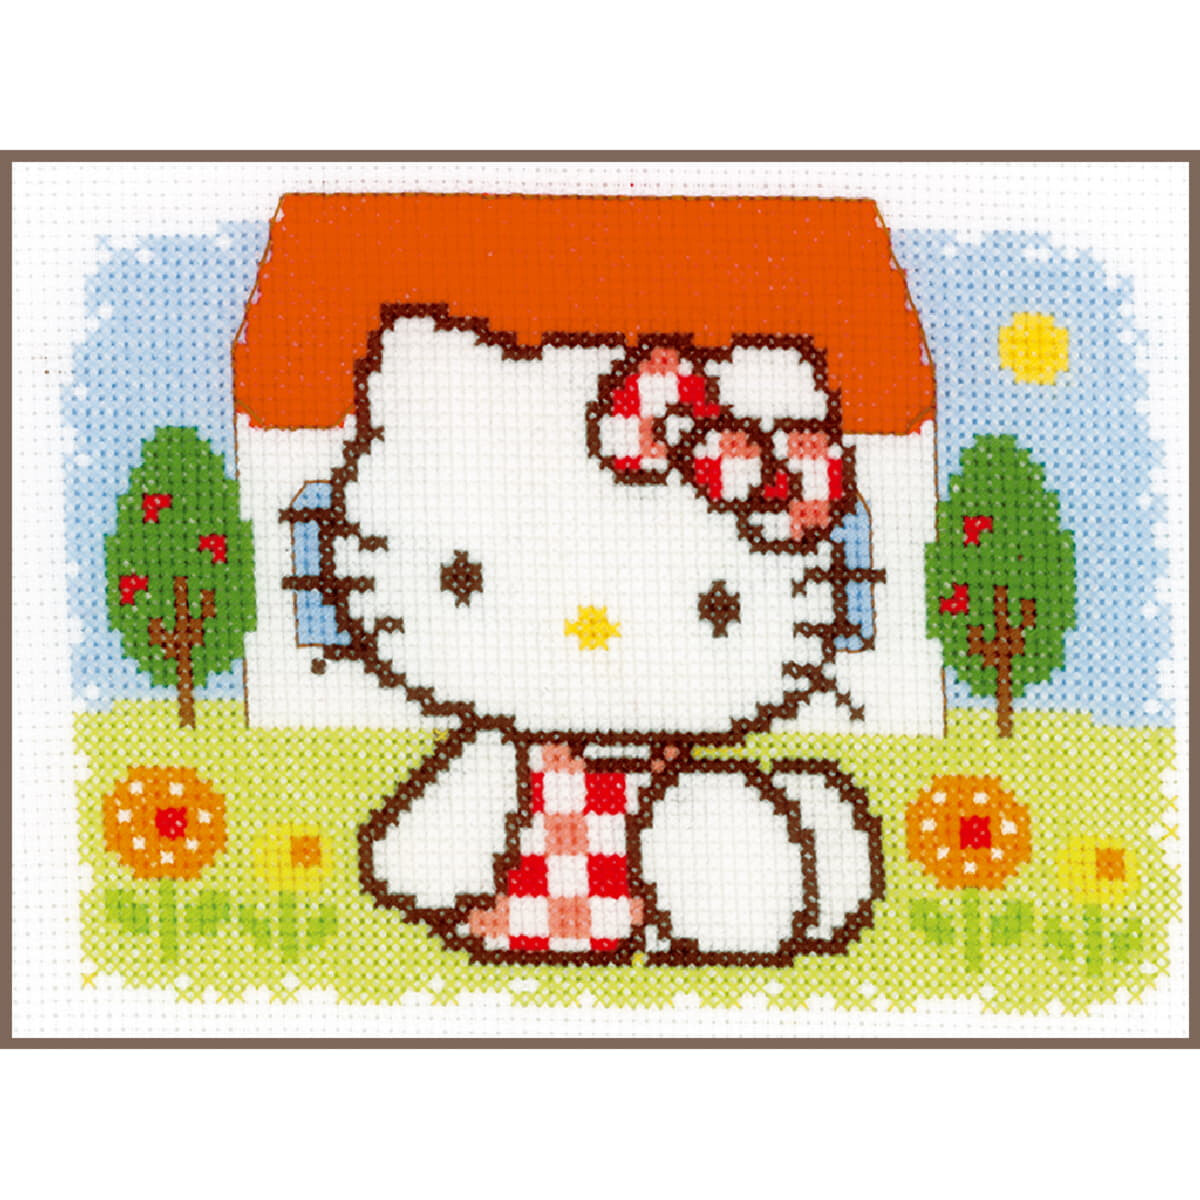 Vervaco Набор для вышивания крестом "Hello Kitty...